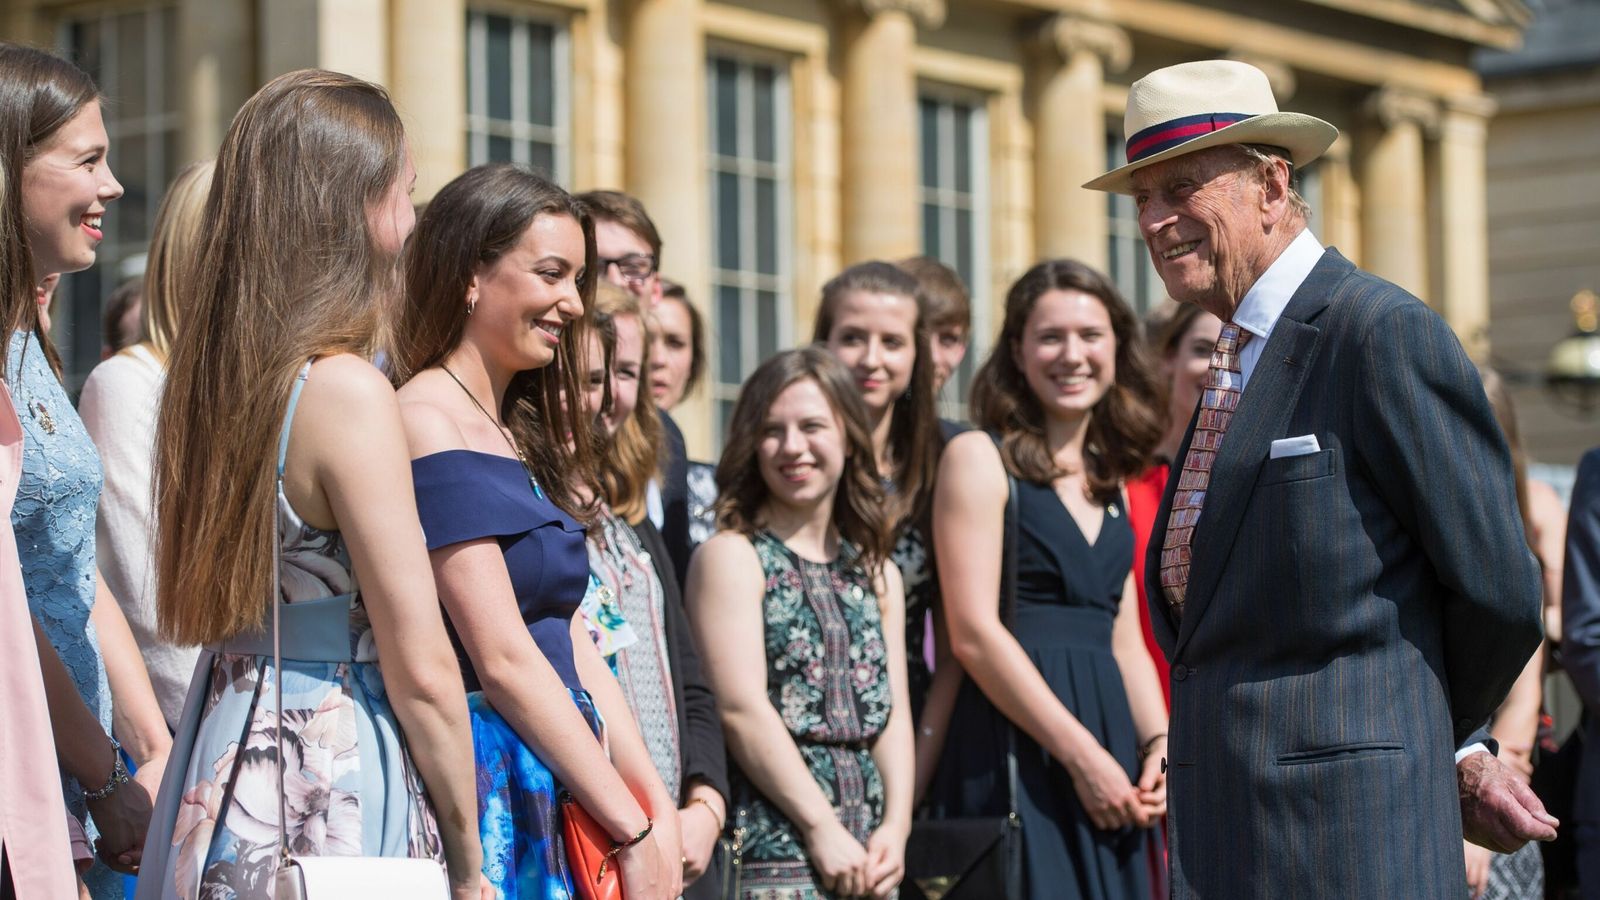 Record numbers started Duke of Edinburgh's Award scheme last year, figures show